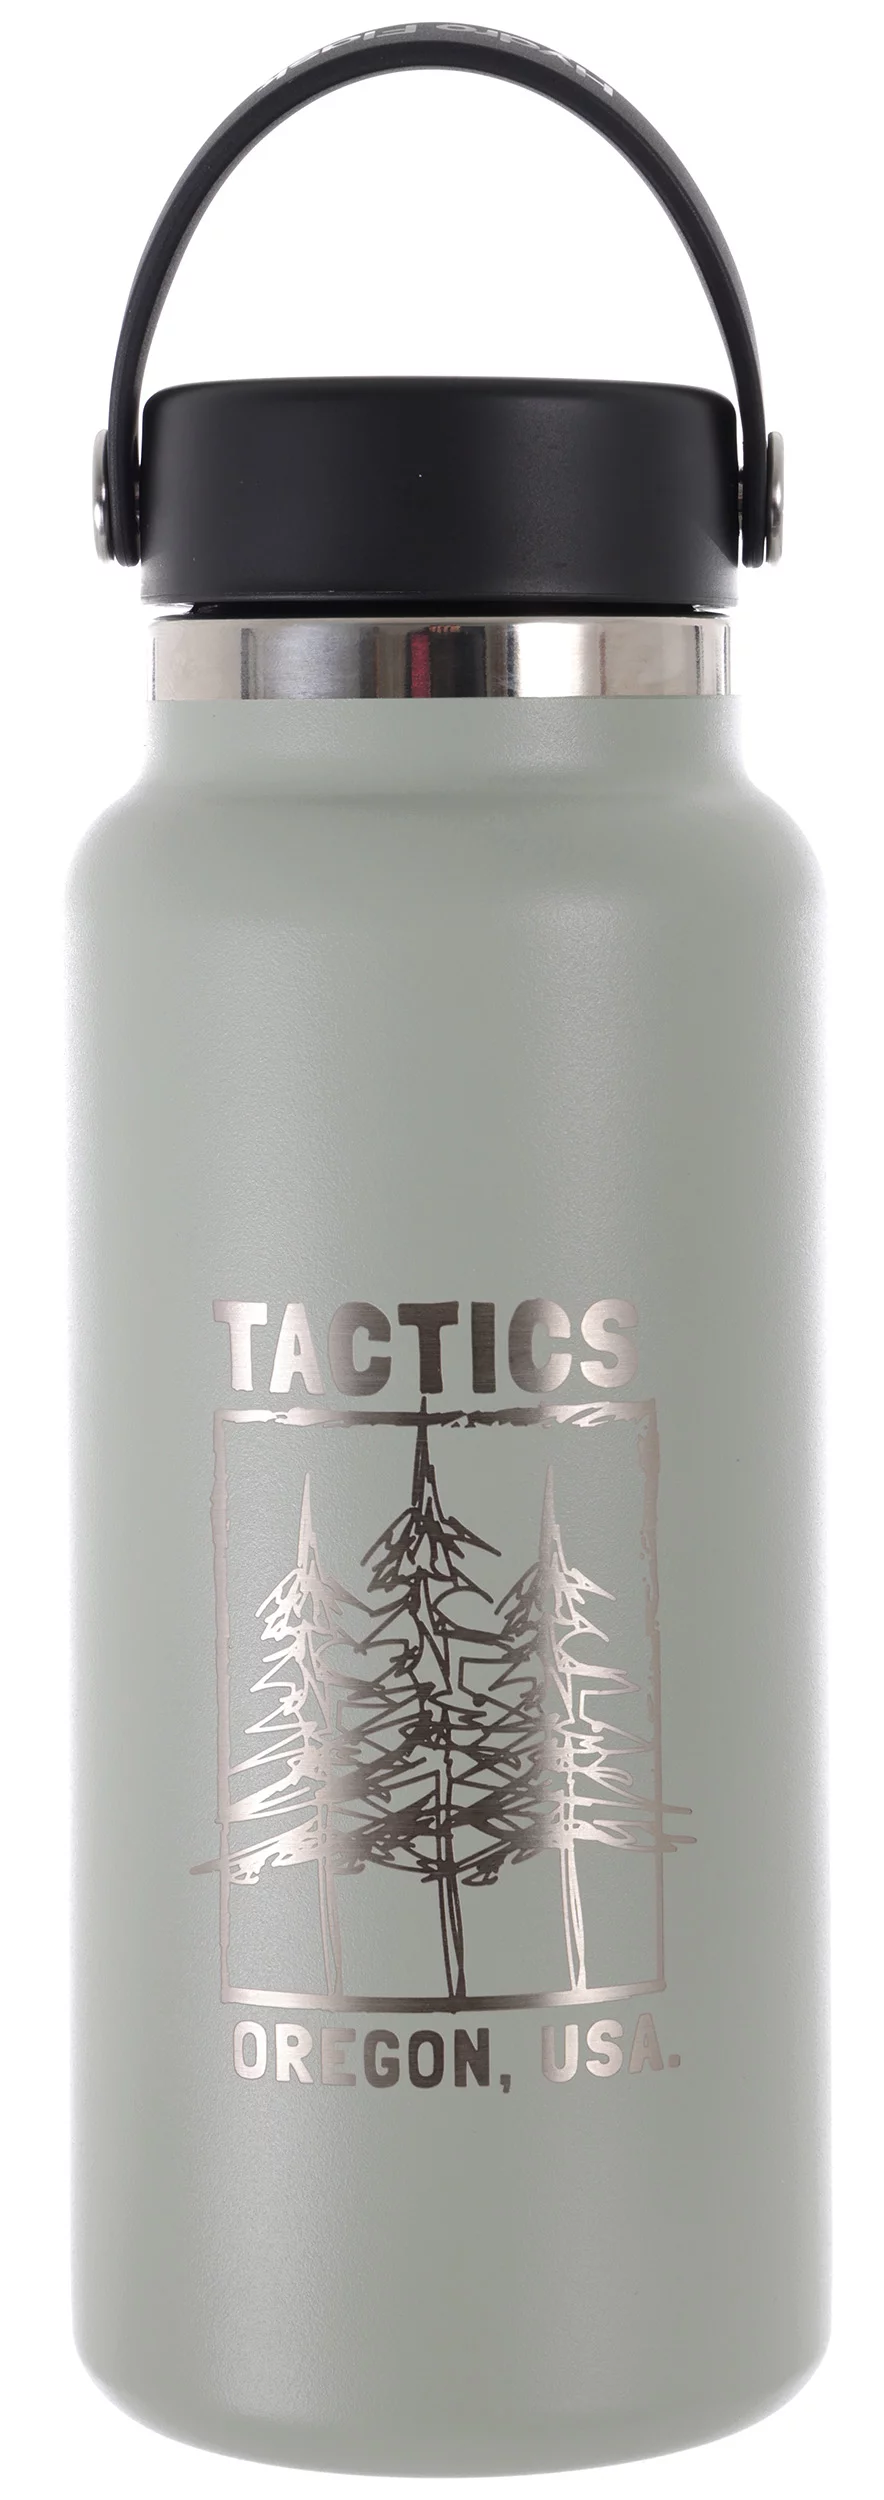 OTX Black Hawk Sunset Water Bottle – OTXNation